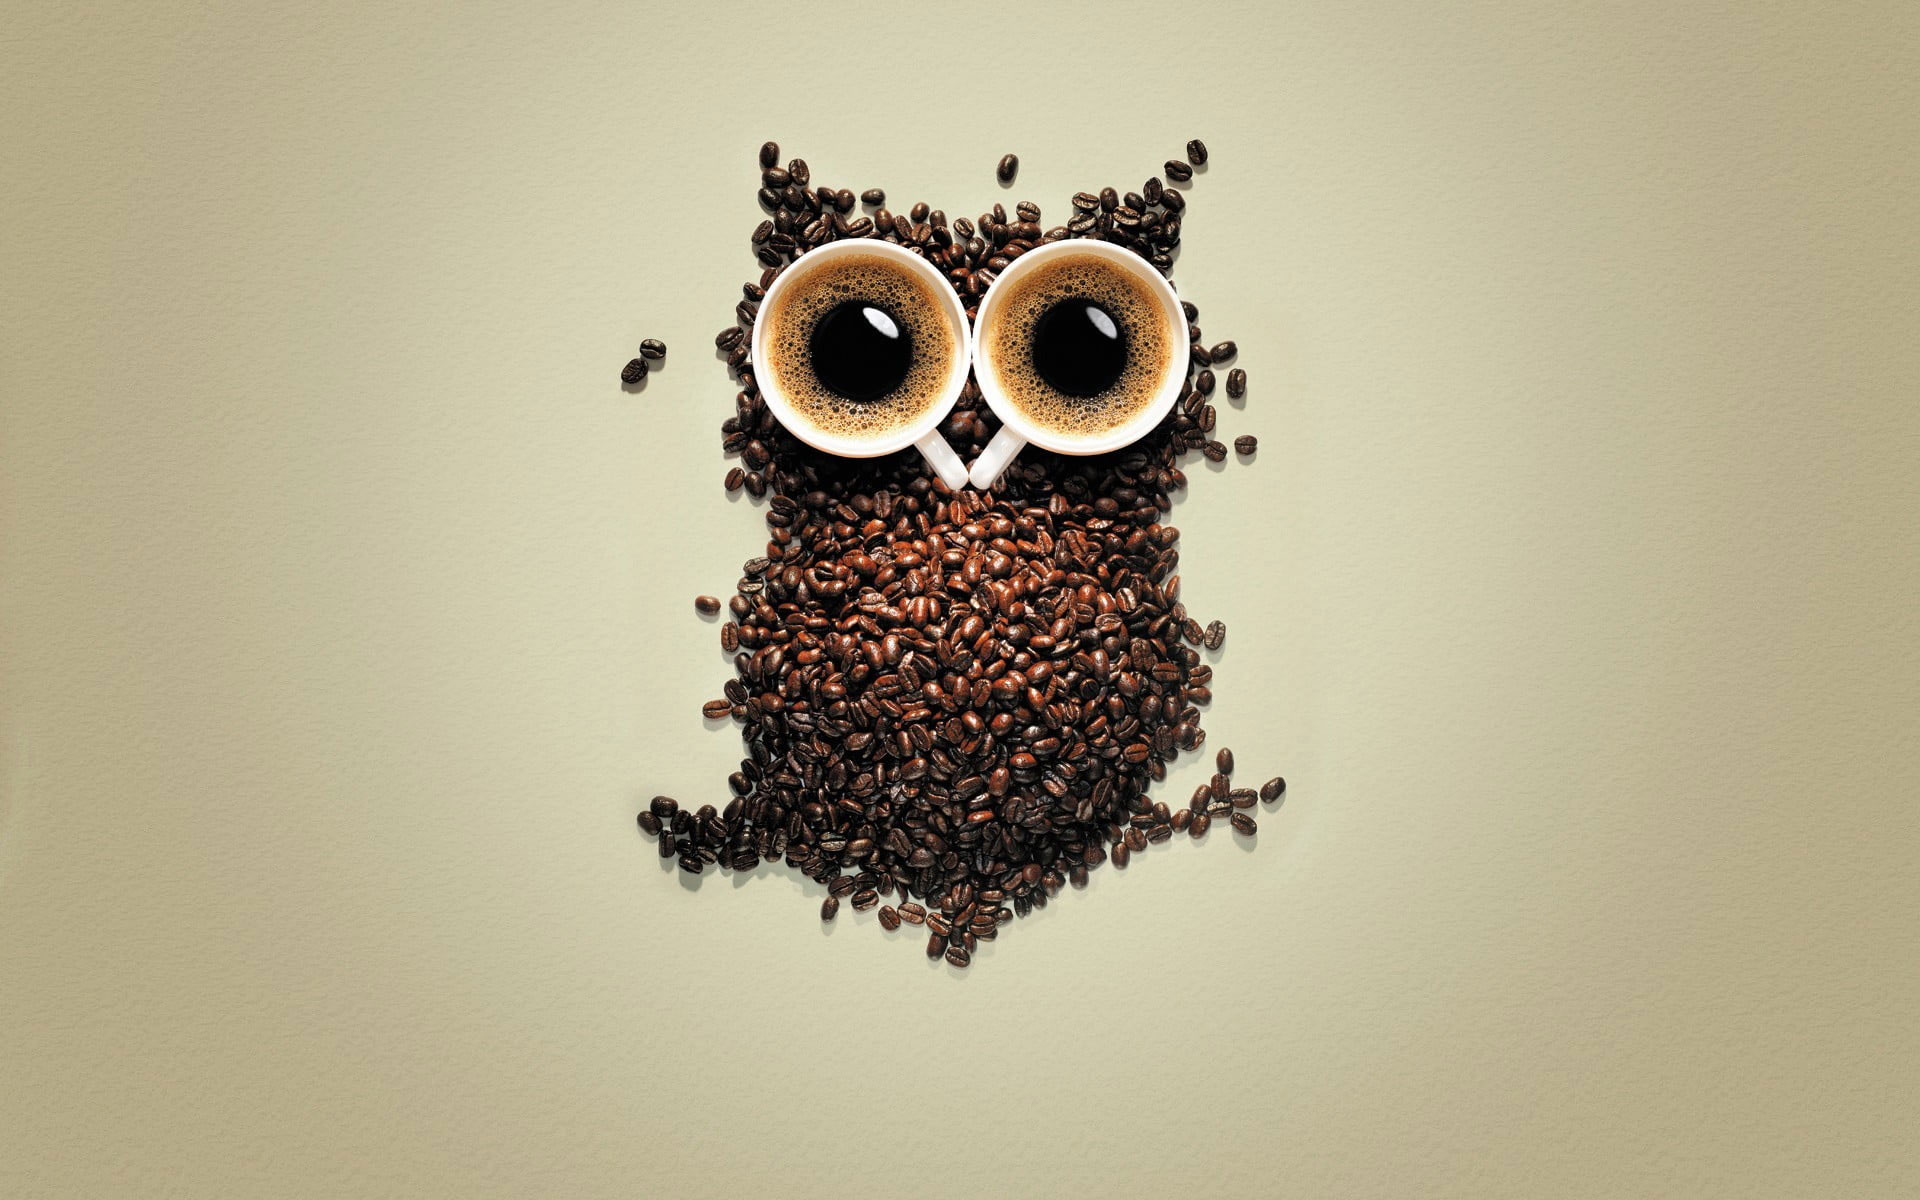 Coffee bean wallpaper, owl, coffee beans, creativity, birds, animals, simple background